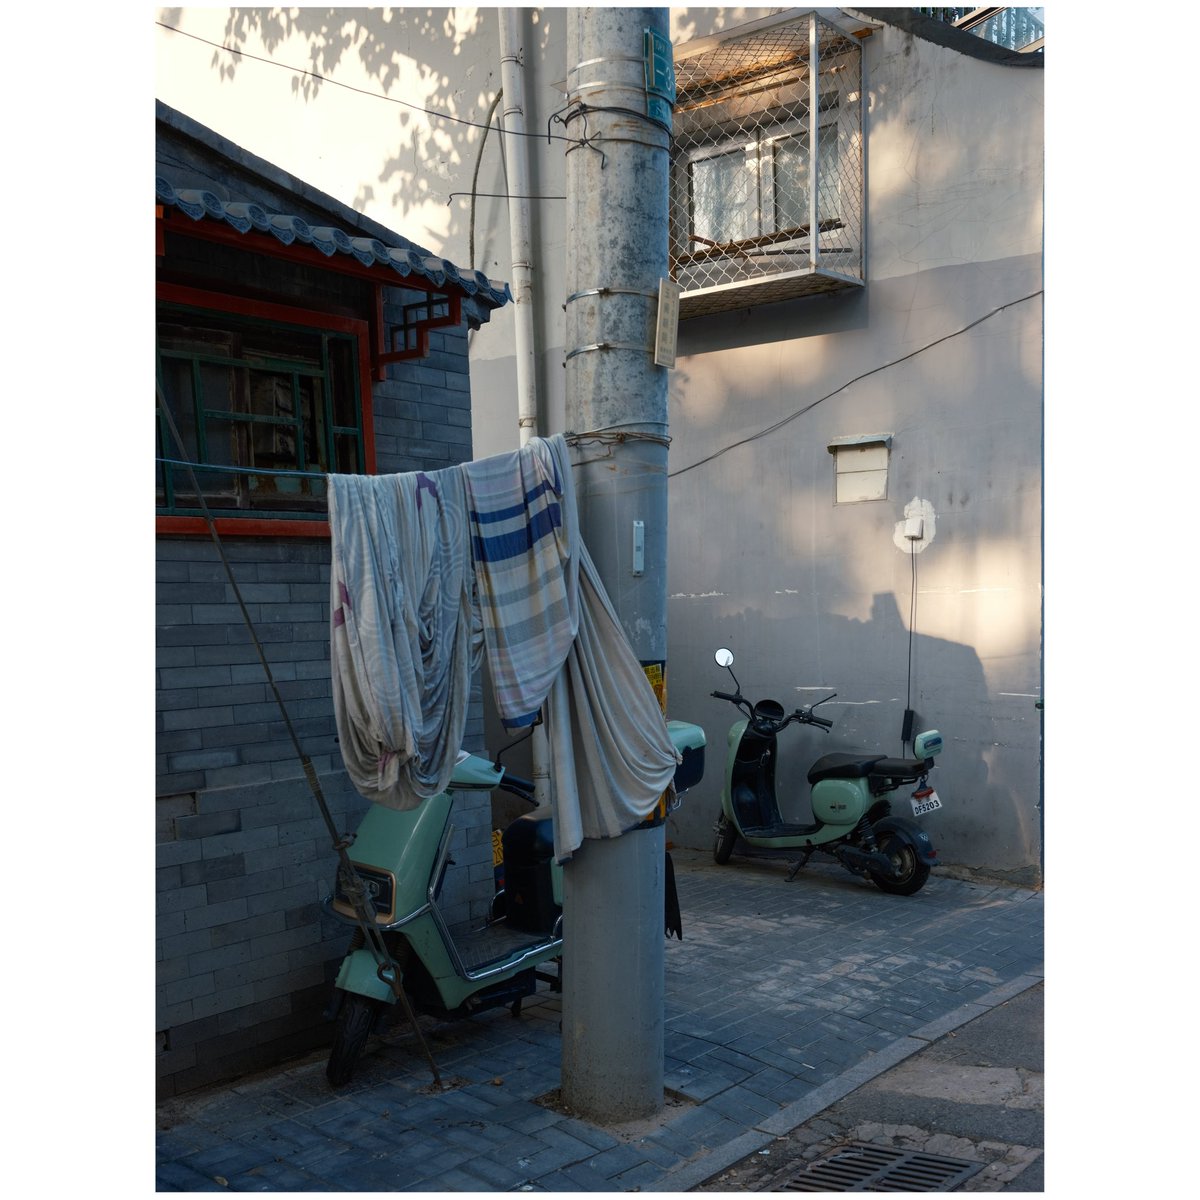 #📷snap 胡同里长着两个和三个轮子的老住户以及它们不说话的邻居们

#写真 #streetphotography #snap #fujifilm #fujifilmGFX #GFX100S #landscapephotography #gf50f35